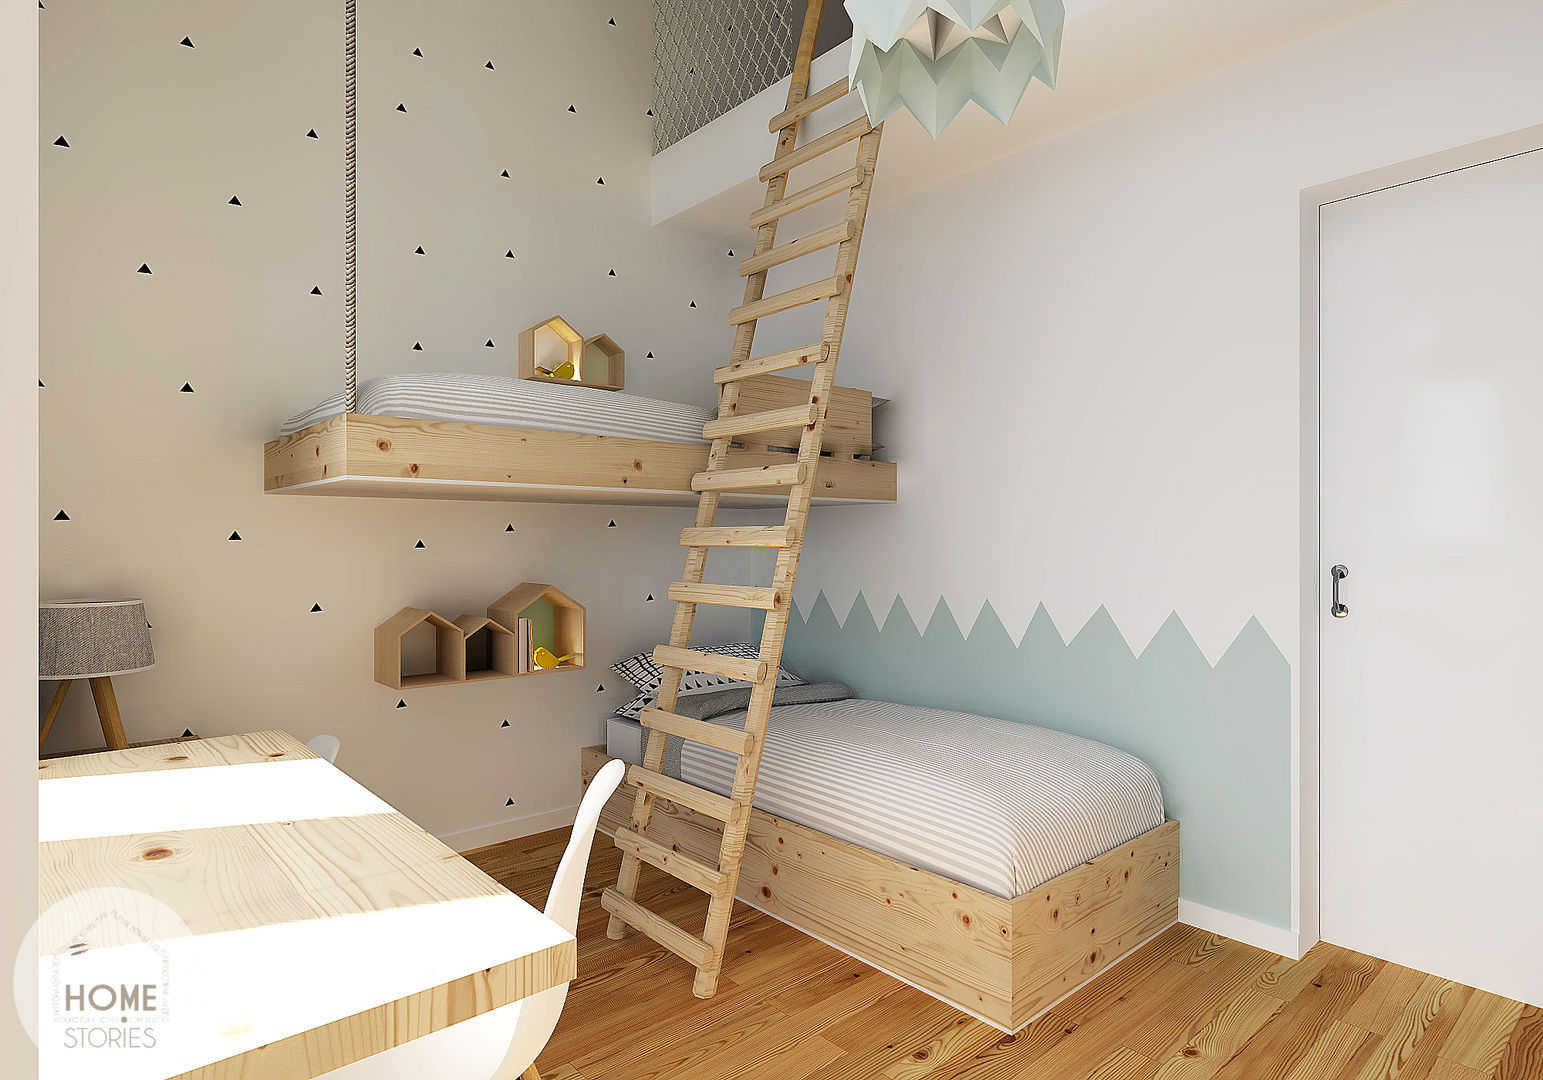 homify Scandinavian style nursery/kids room